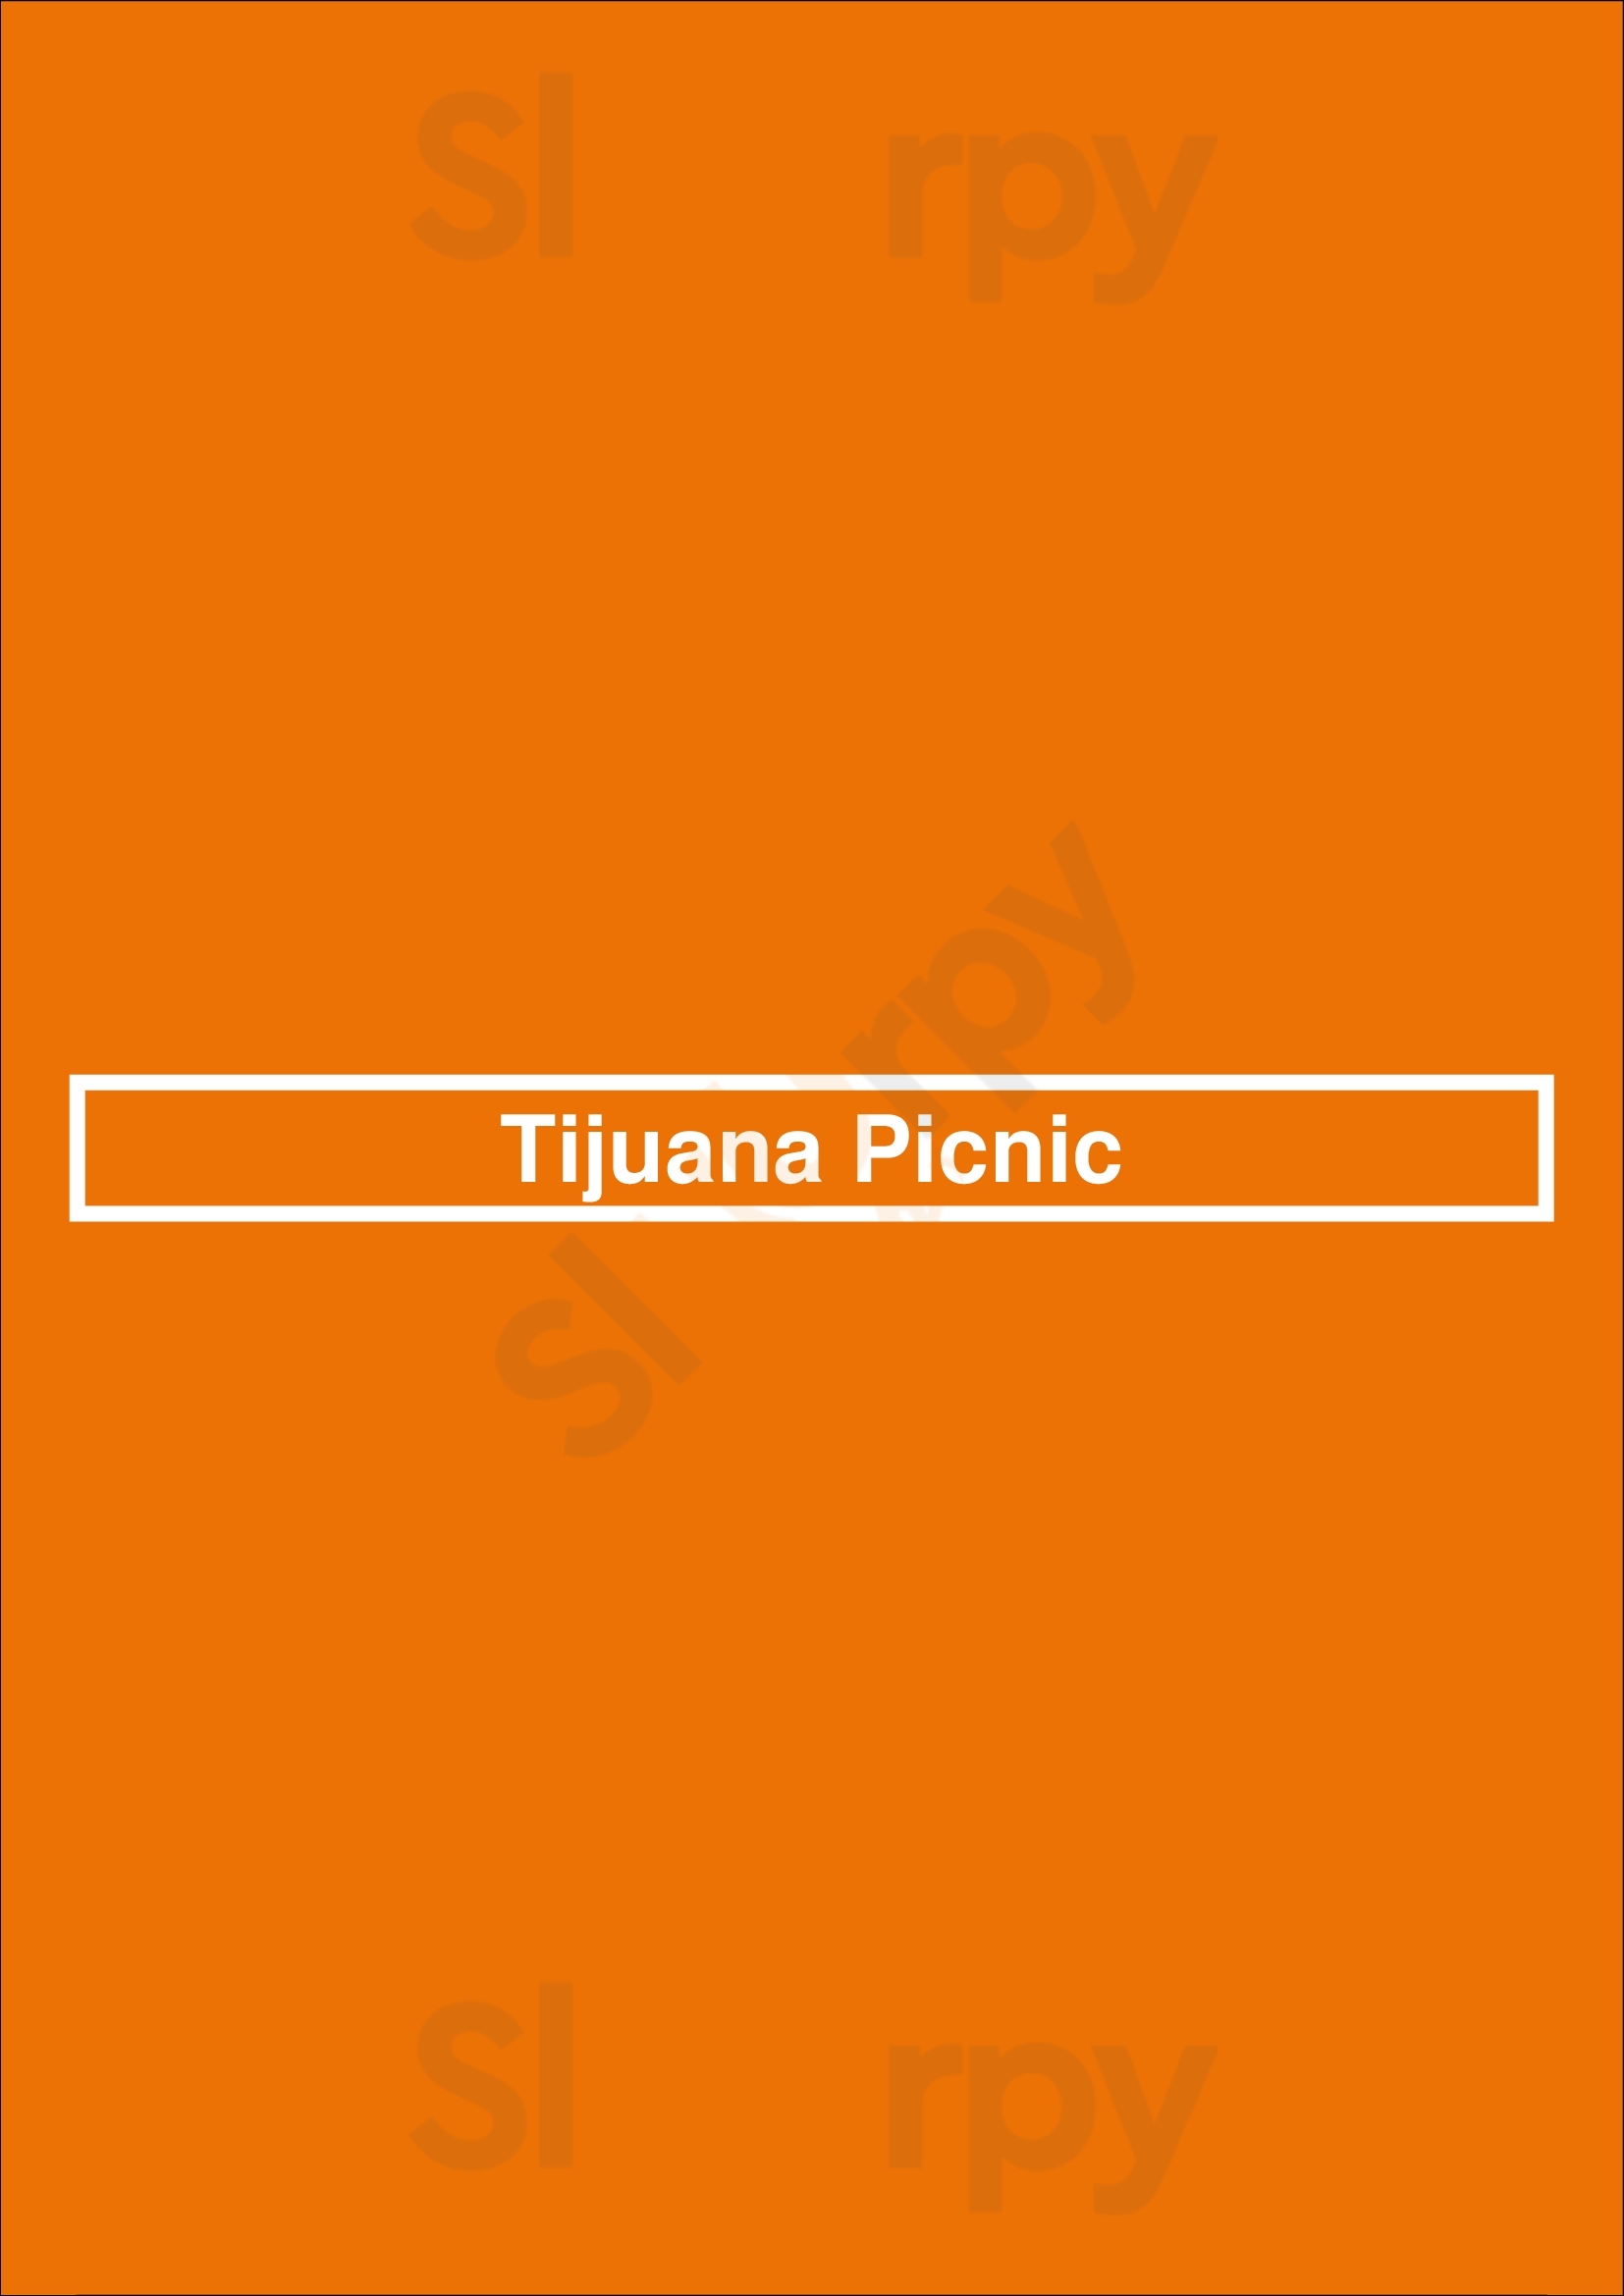 Tijuana Picnic New York City Menu - 1